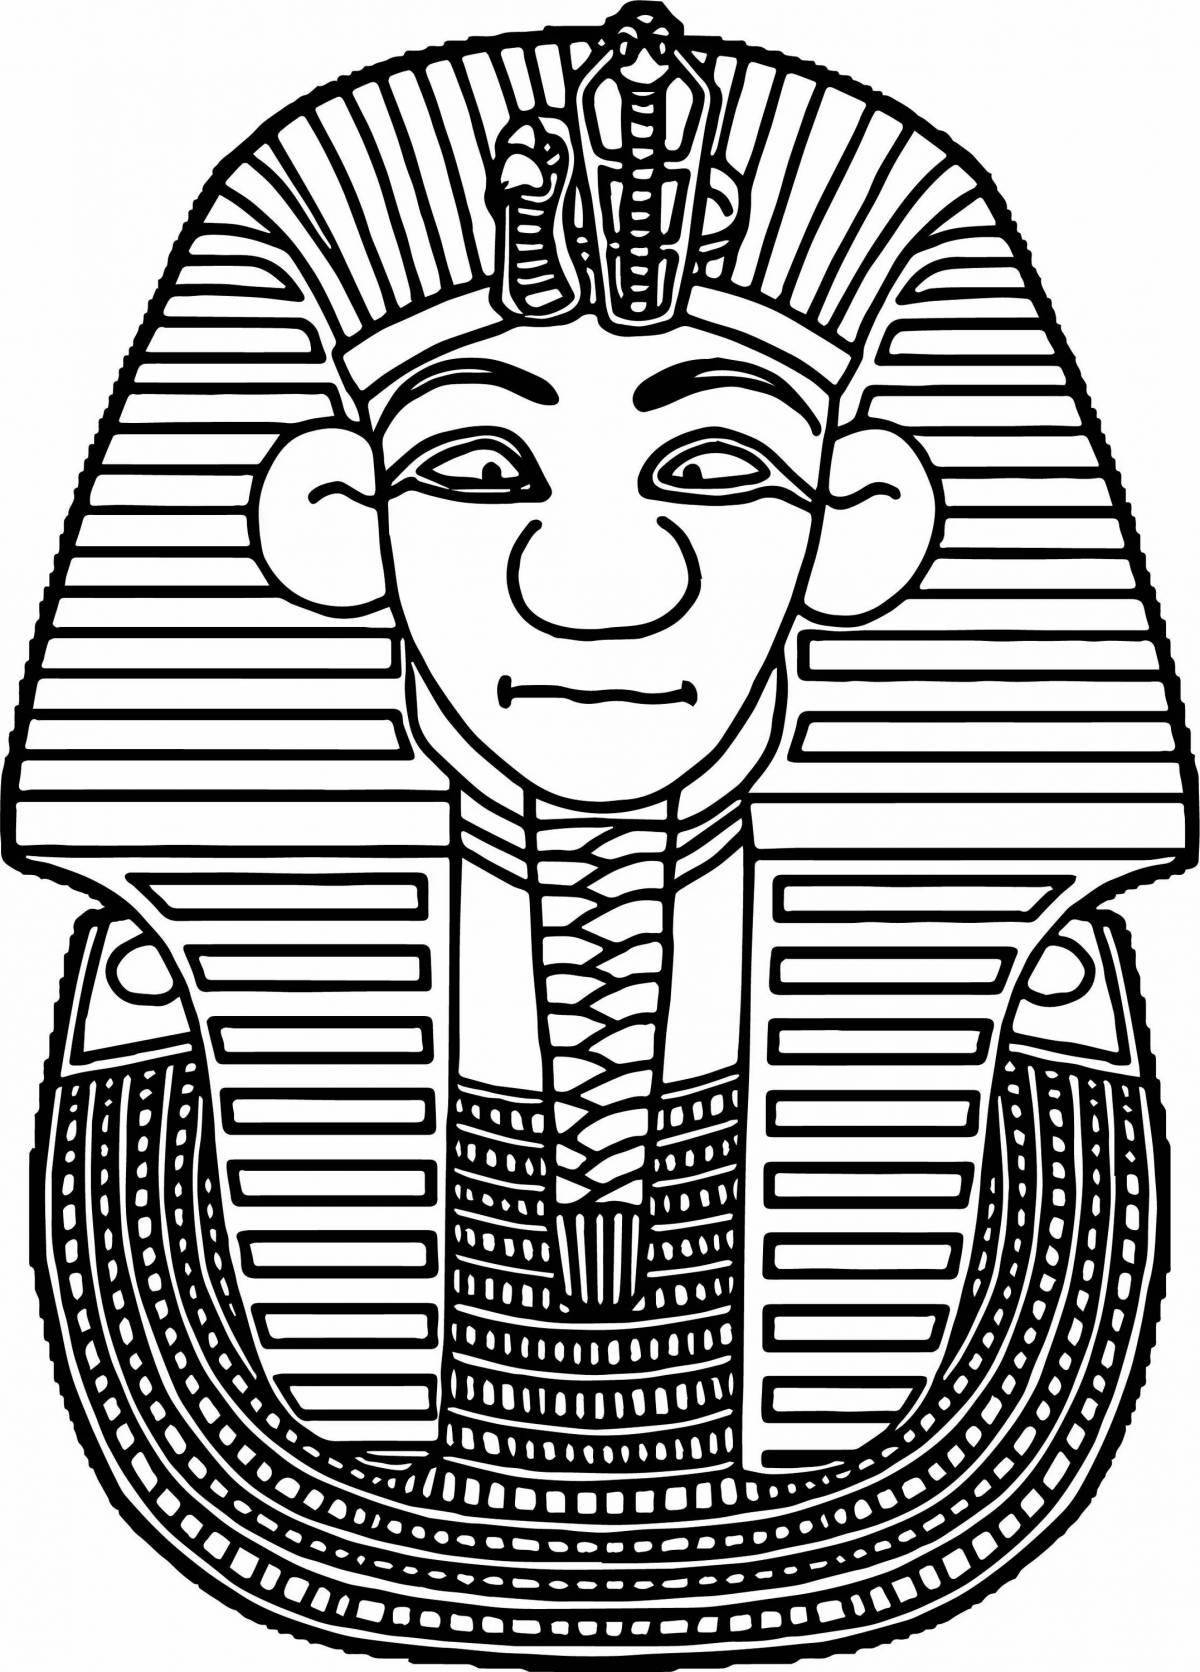 Раскраска потрясающая маска фараона тутанхамона